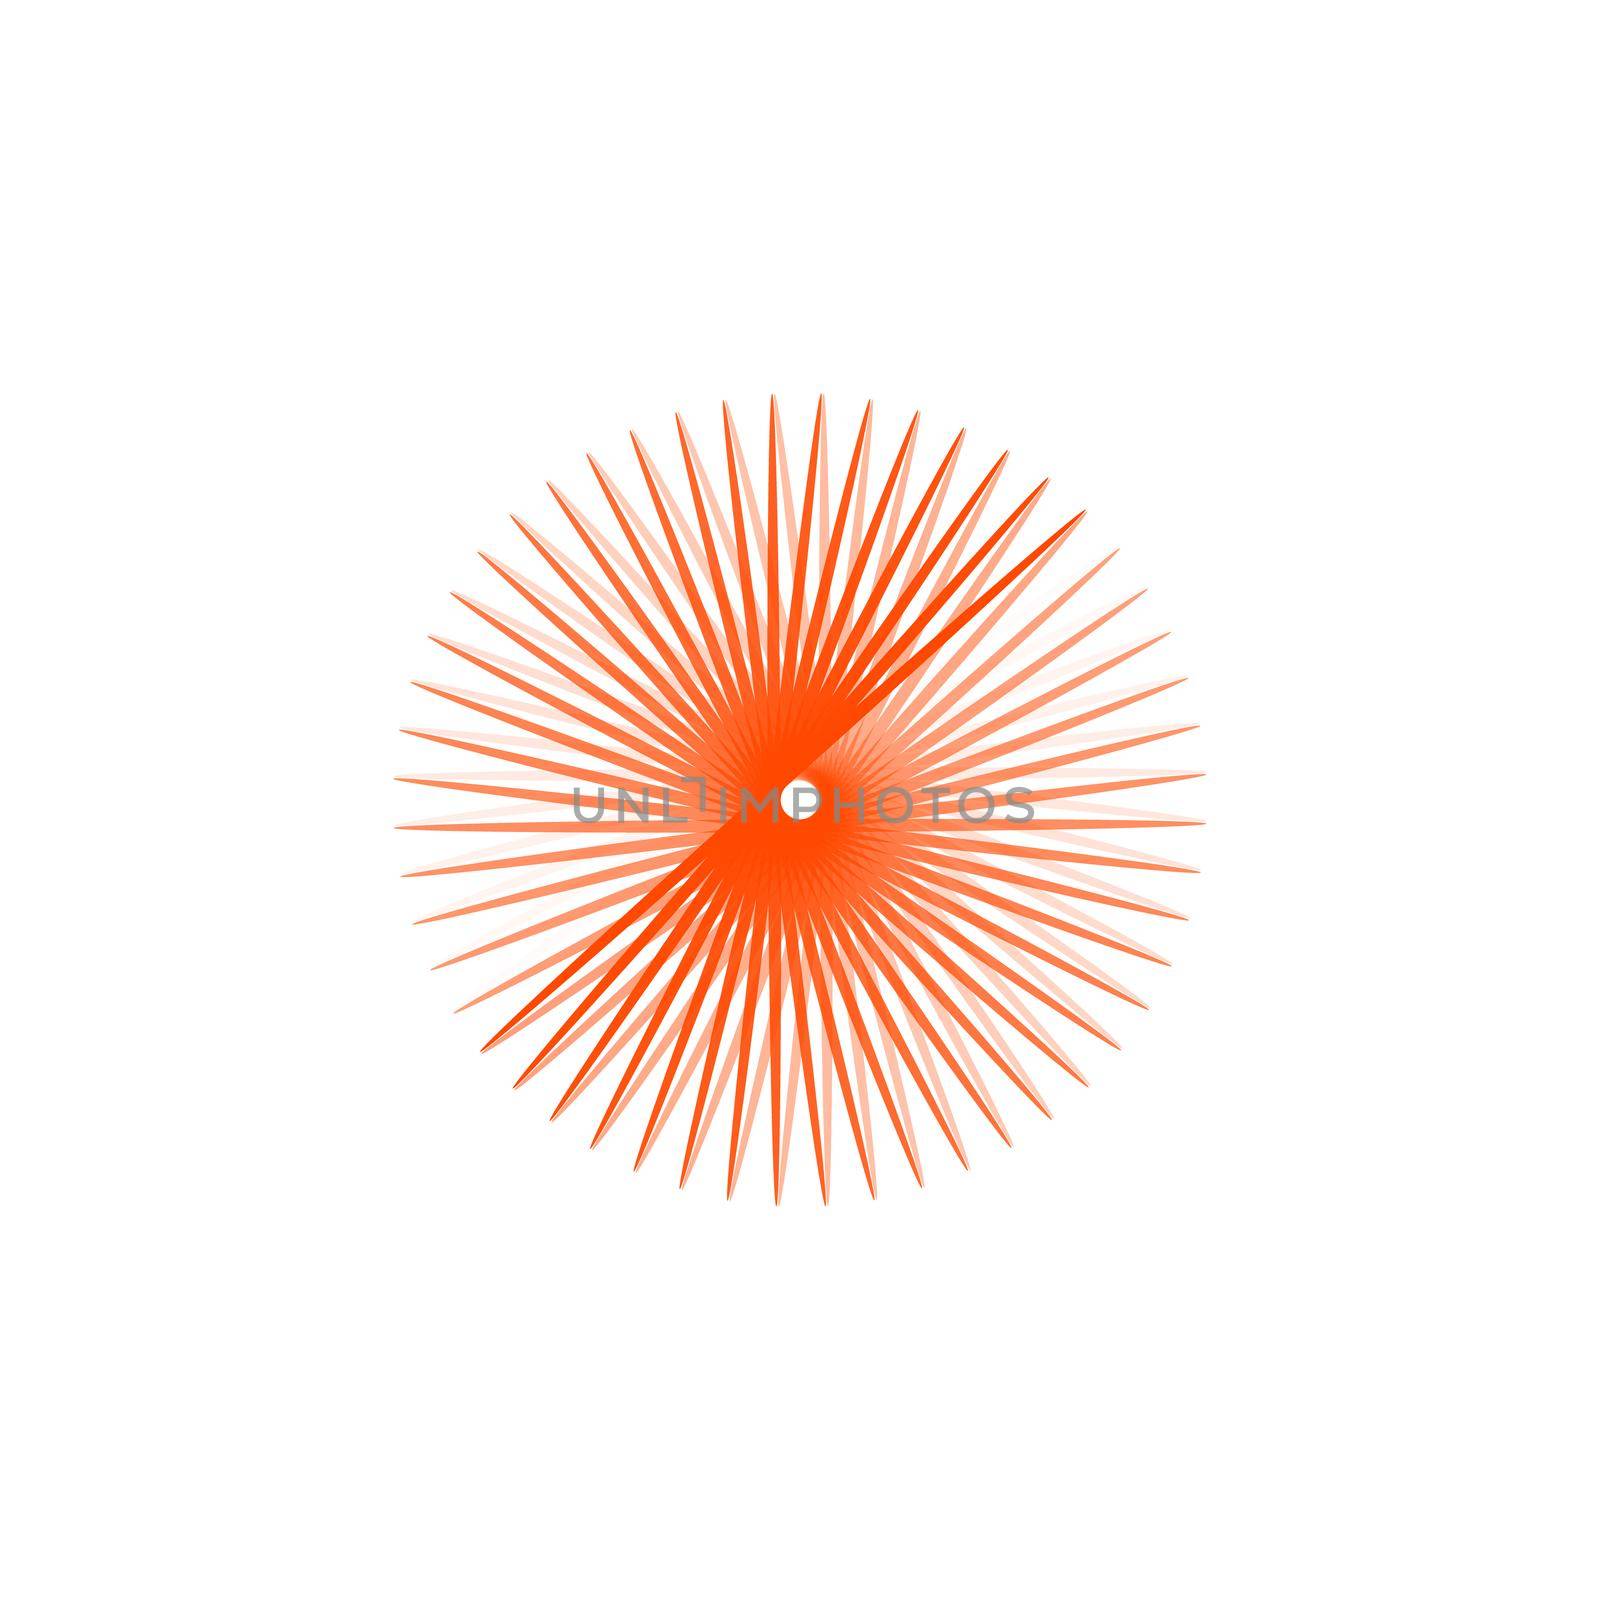 Creative vector illustration of geometric sun beams. Stock Vector illustration isolated